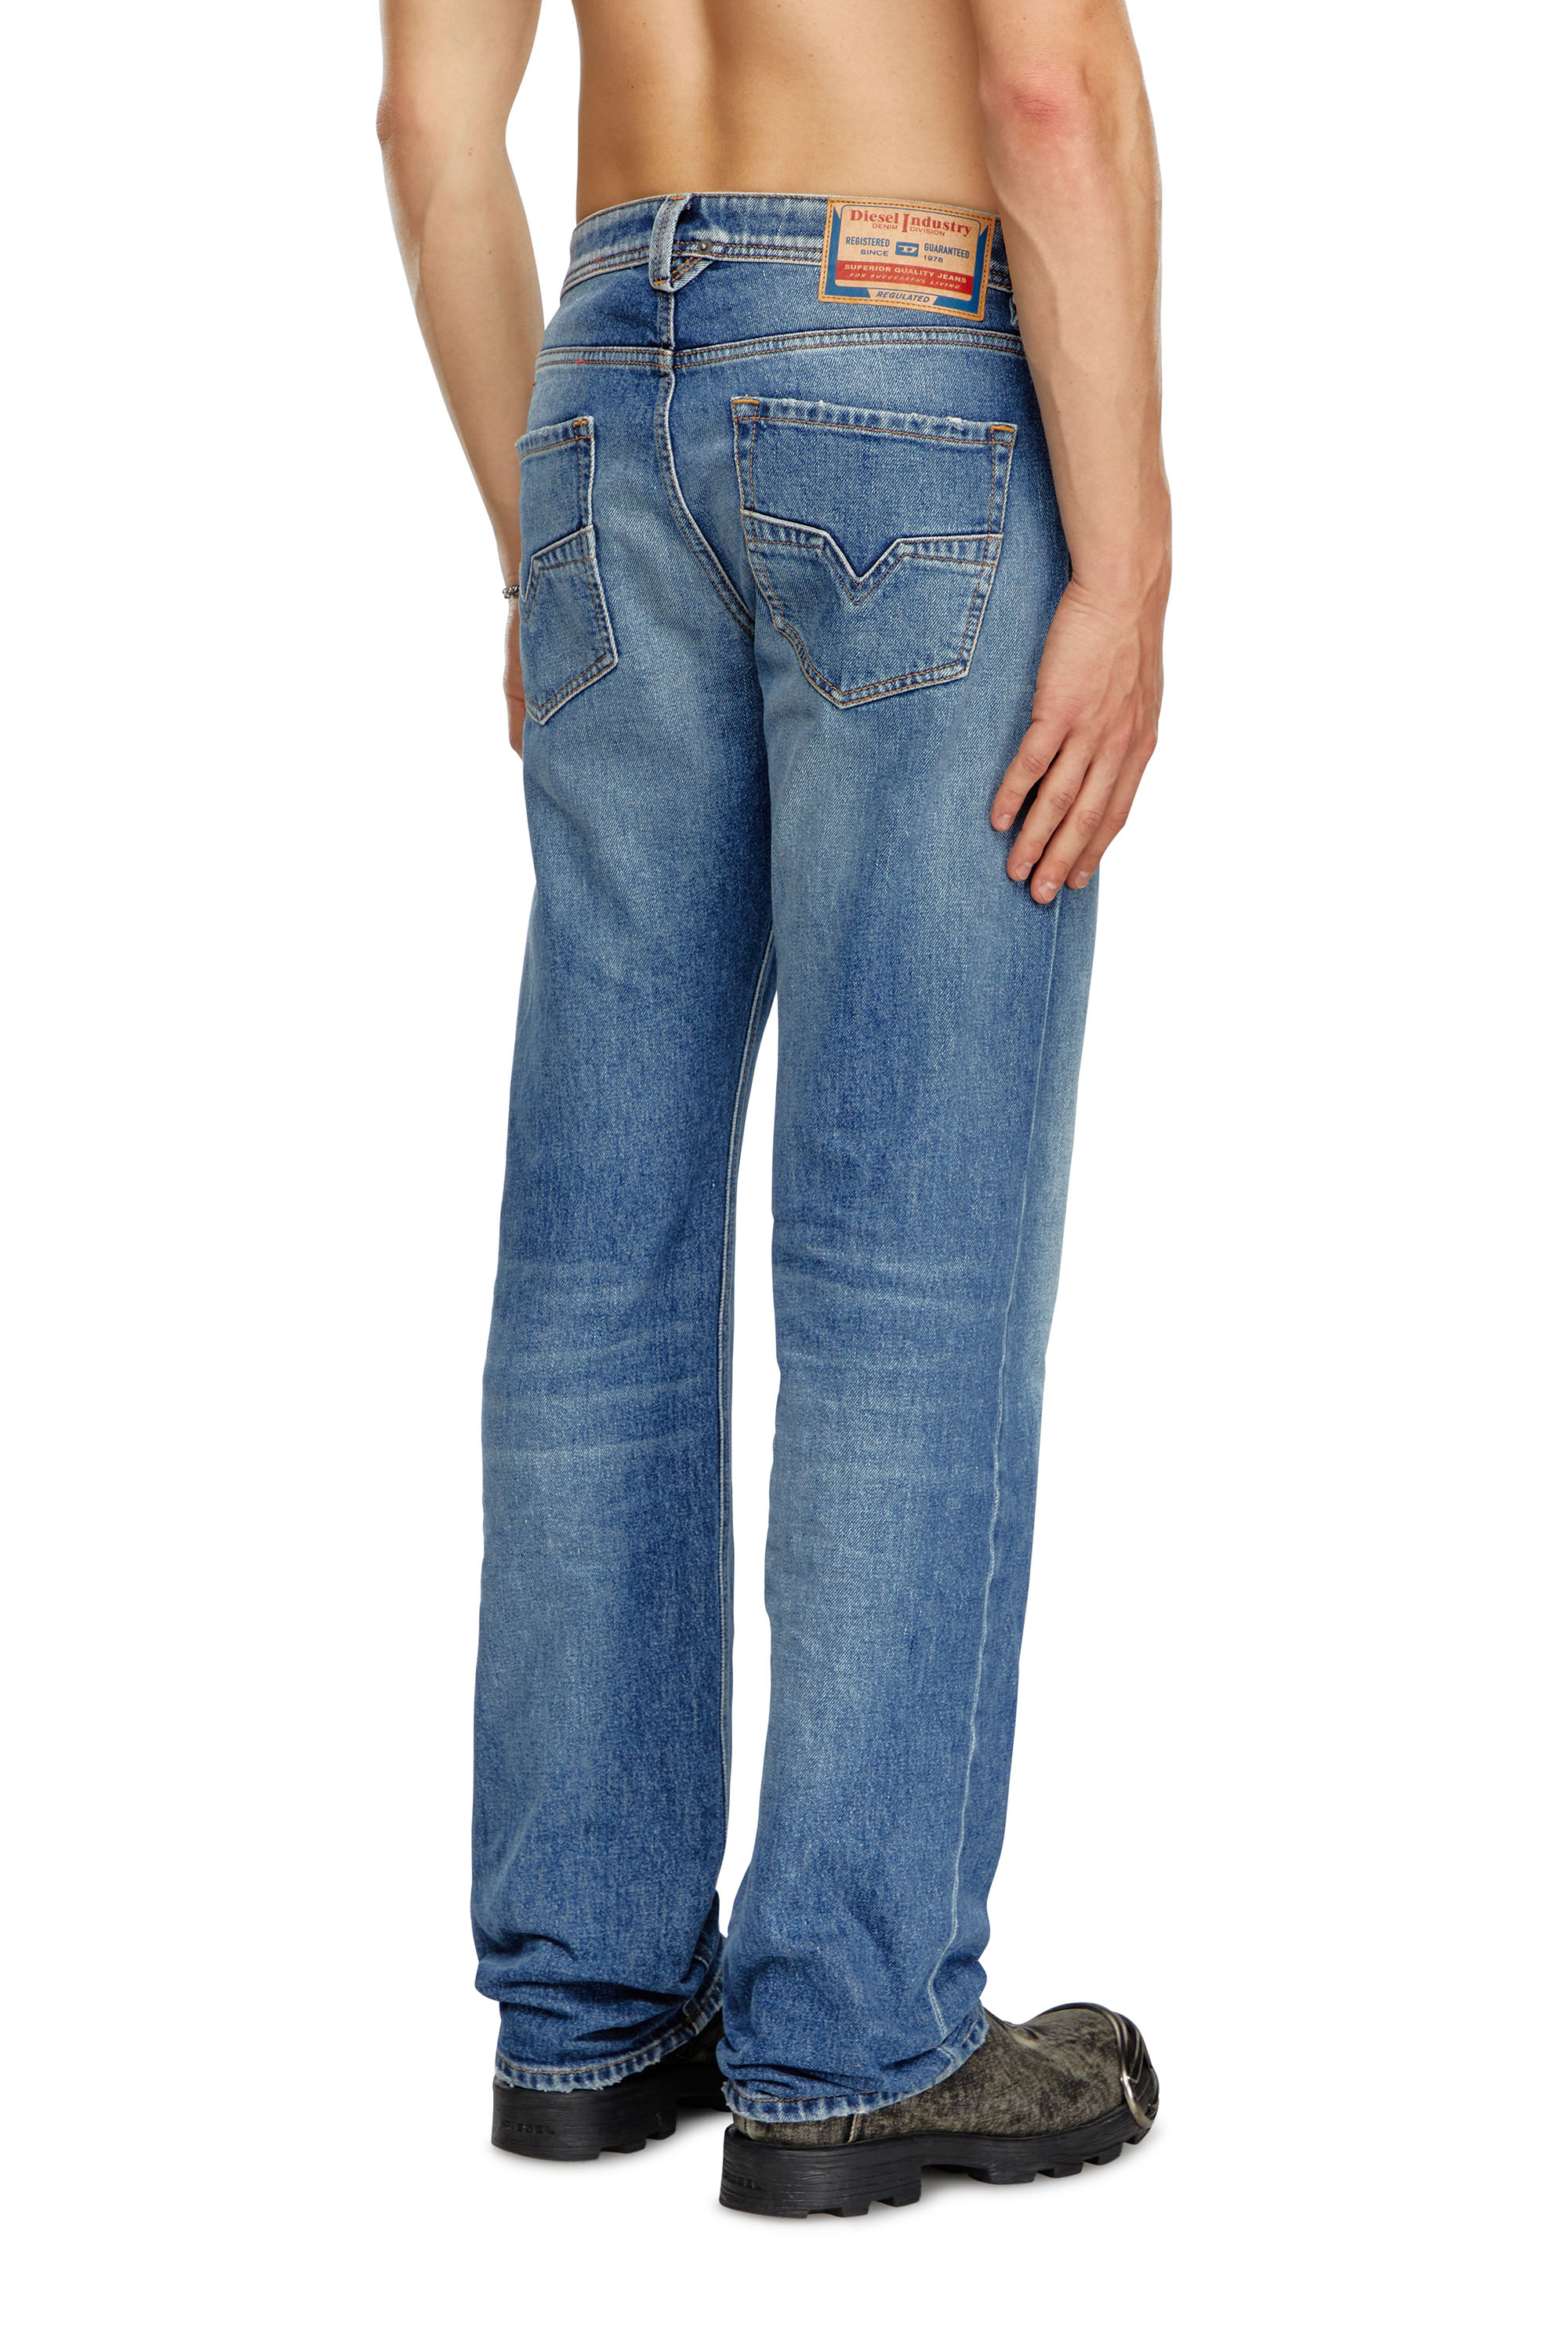 Men's Oversized Straight Jeans | Medium blue | Diesel 1985 Larkee